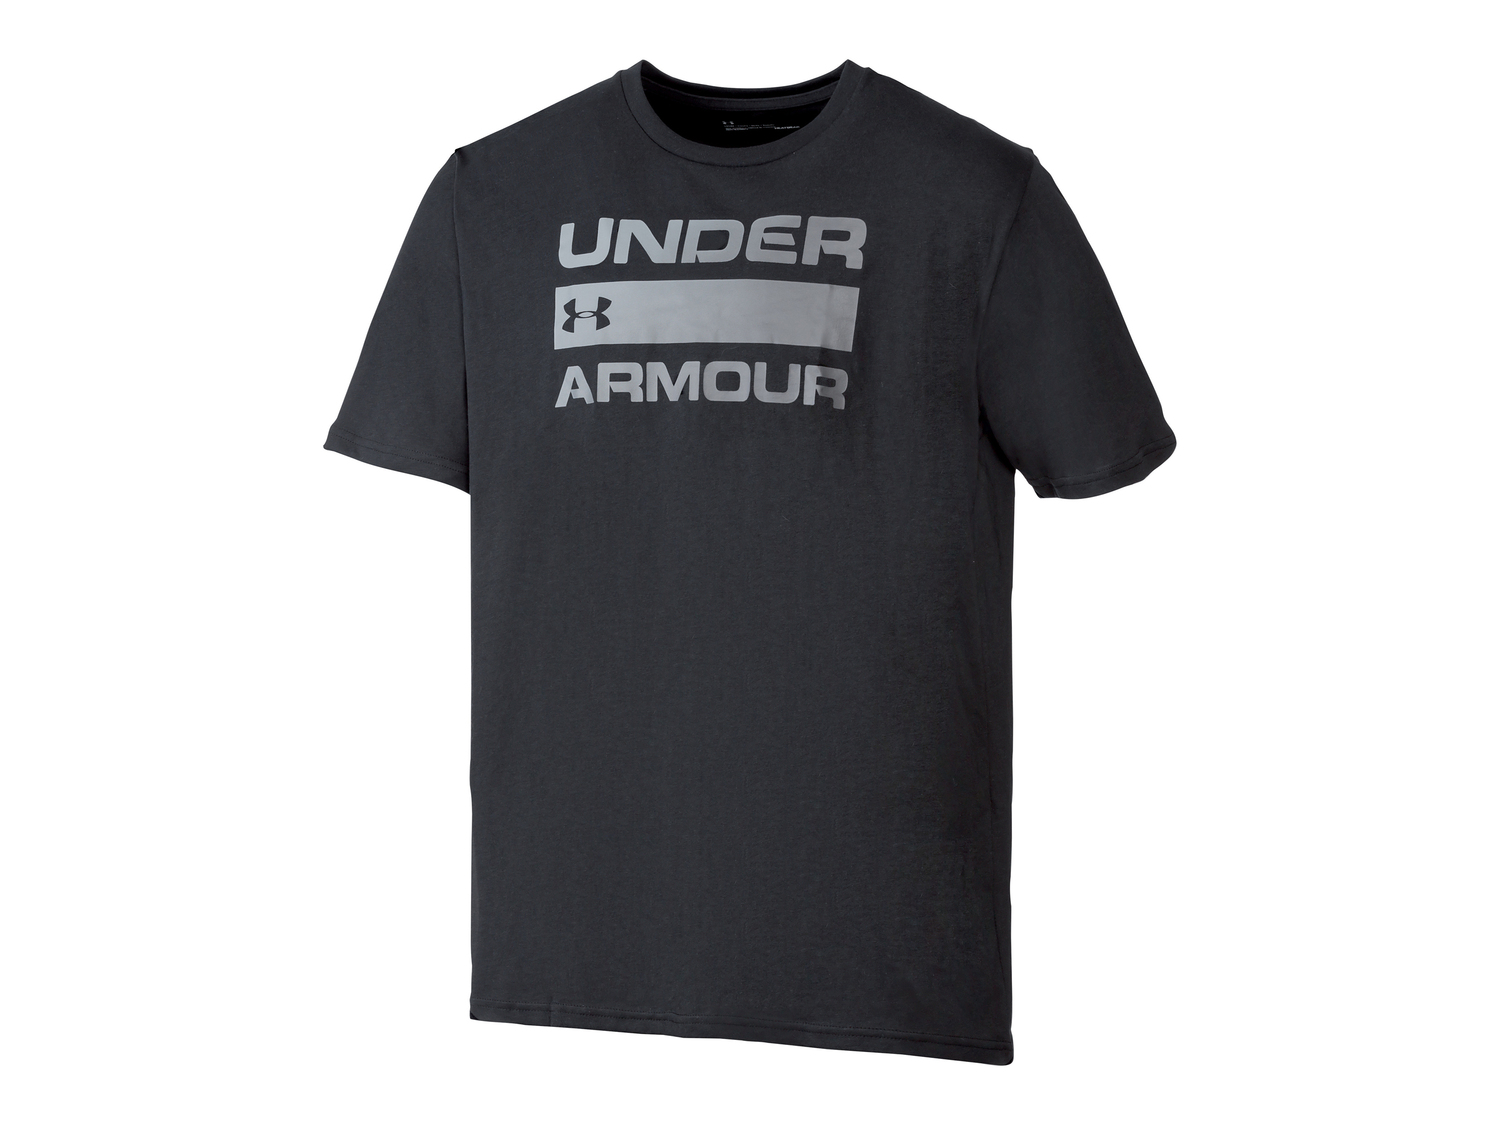 T-shirt sportiva da uomo Under Armour , prezzo 19.99 € 
Misure: S-XXL
Taglie ...